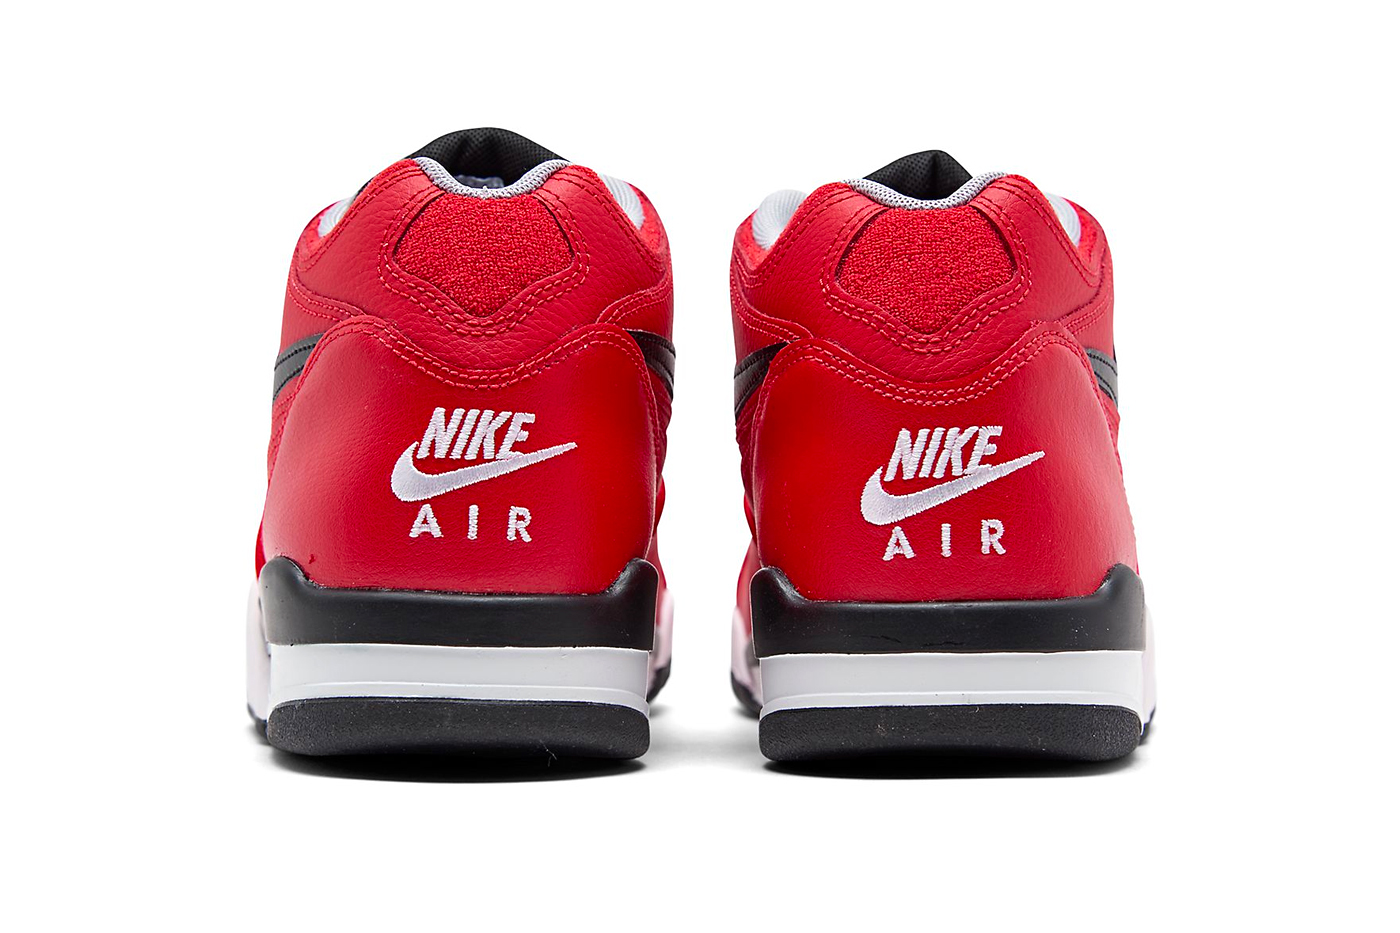 Nike Air Flight '89 "Red Cement" Sneaker Release | Drops Hypebeast